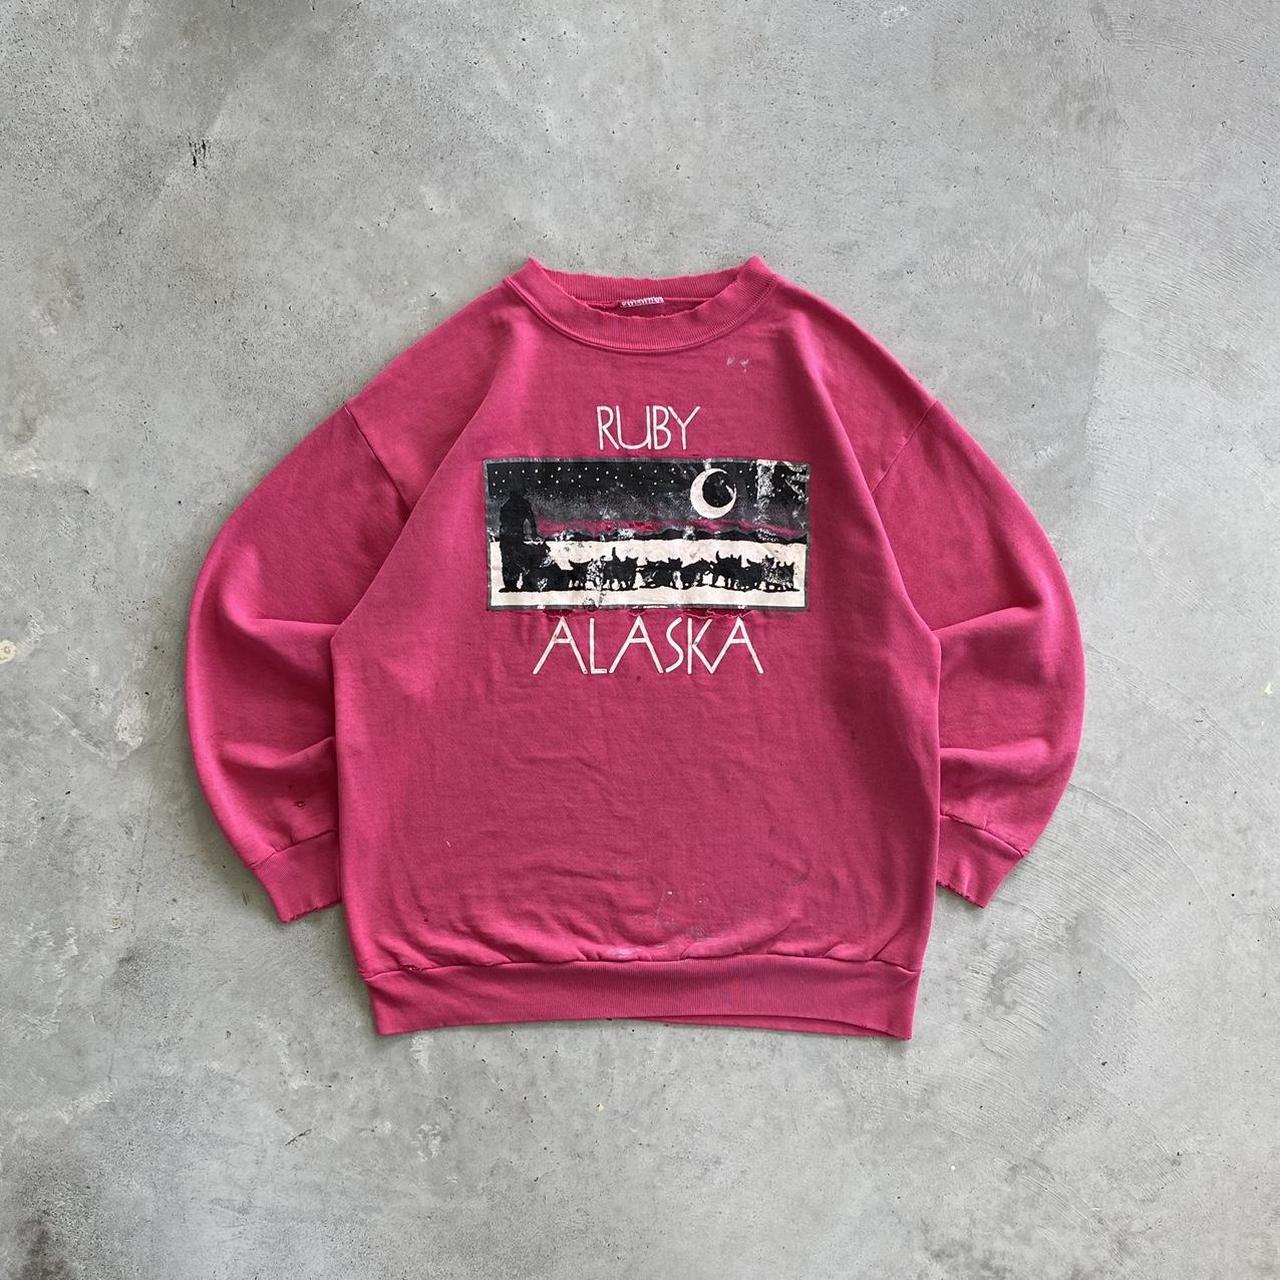 Vintage 90s alaska sweatshirt - Gem